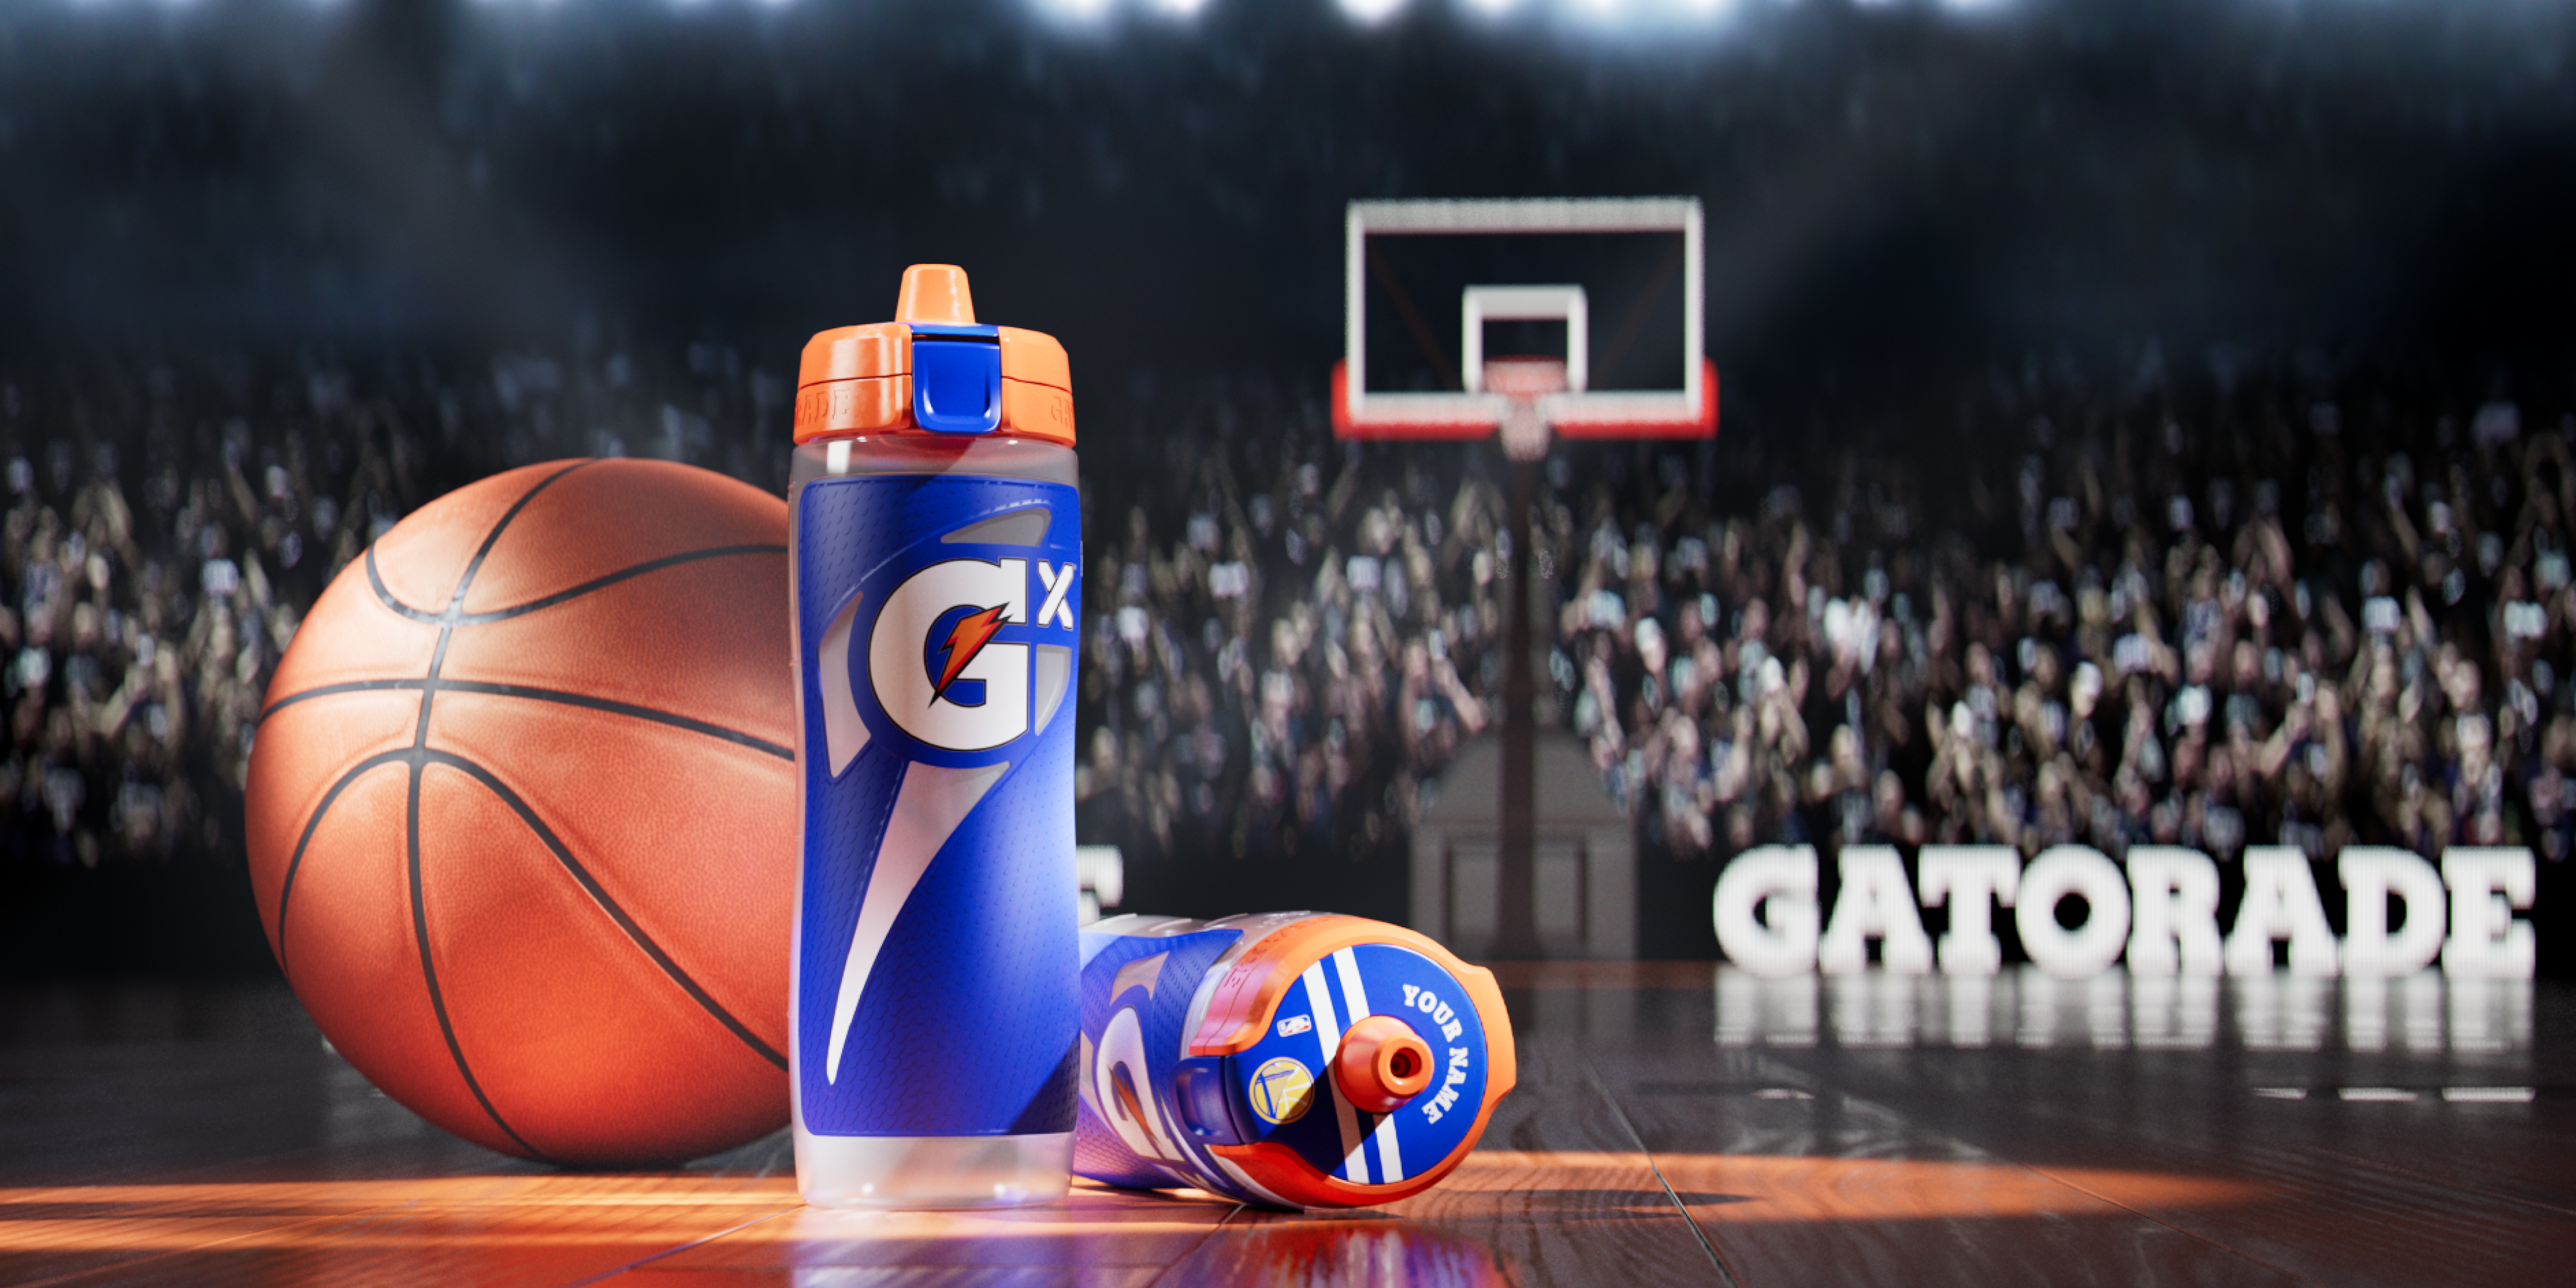 Basketball and Gx bottle on NBA court